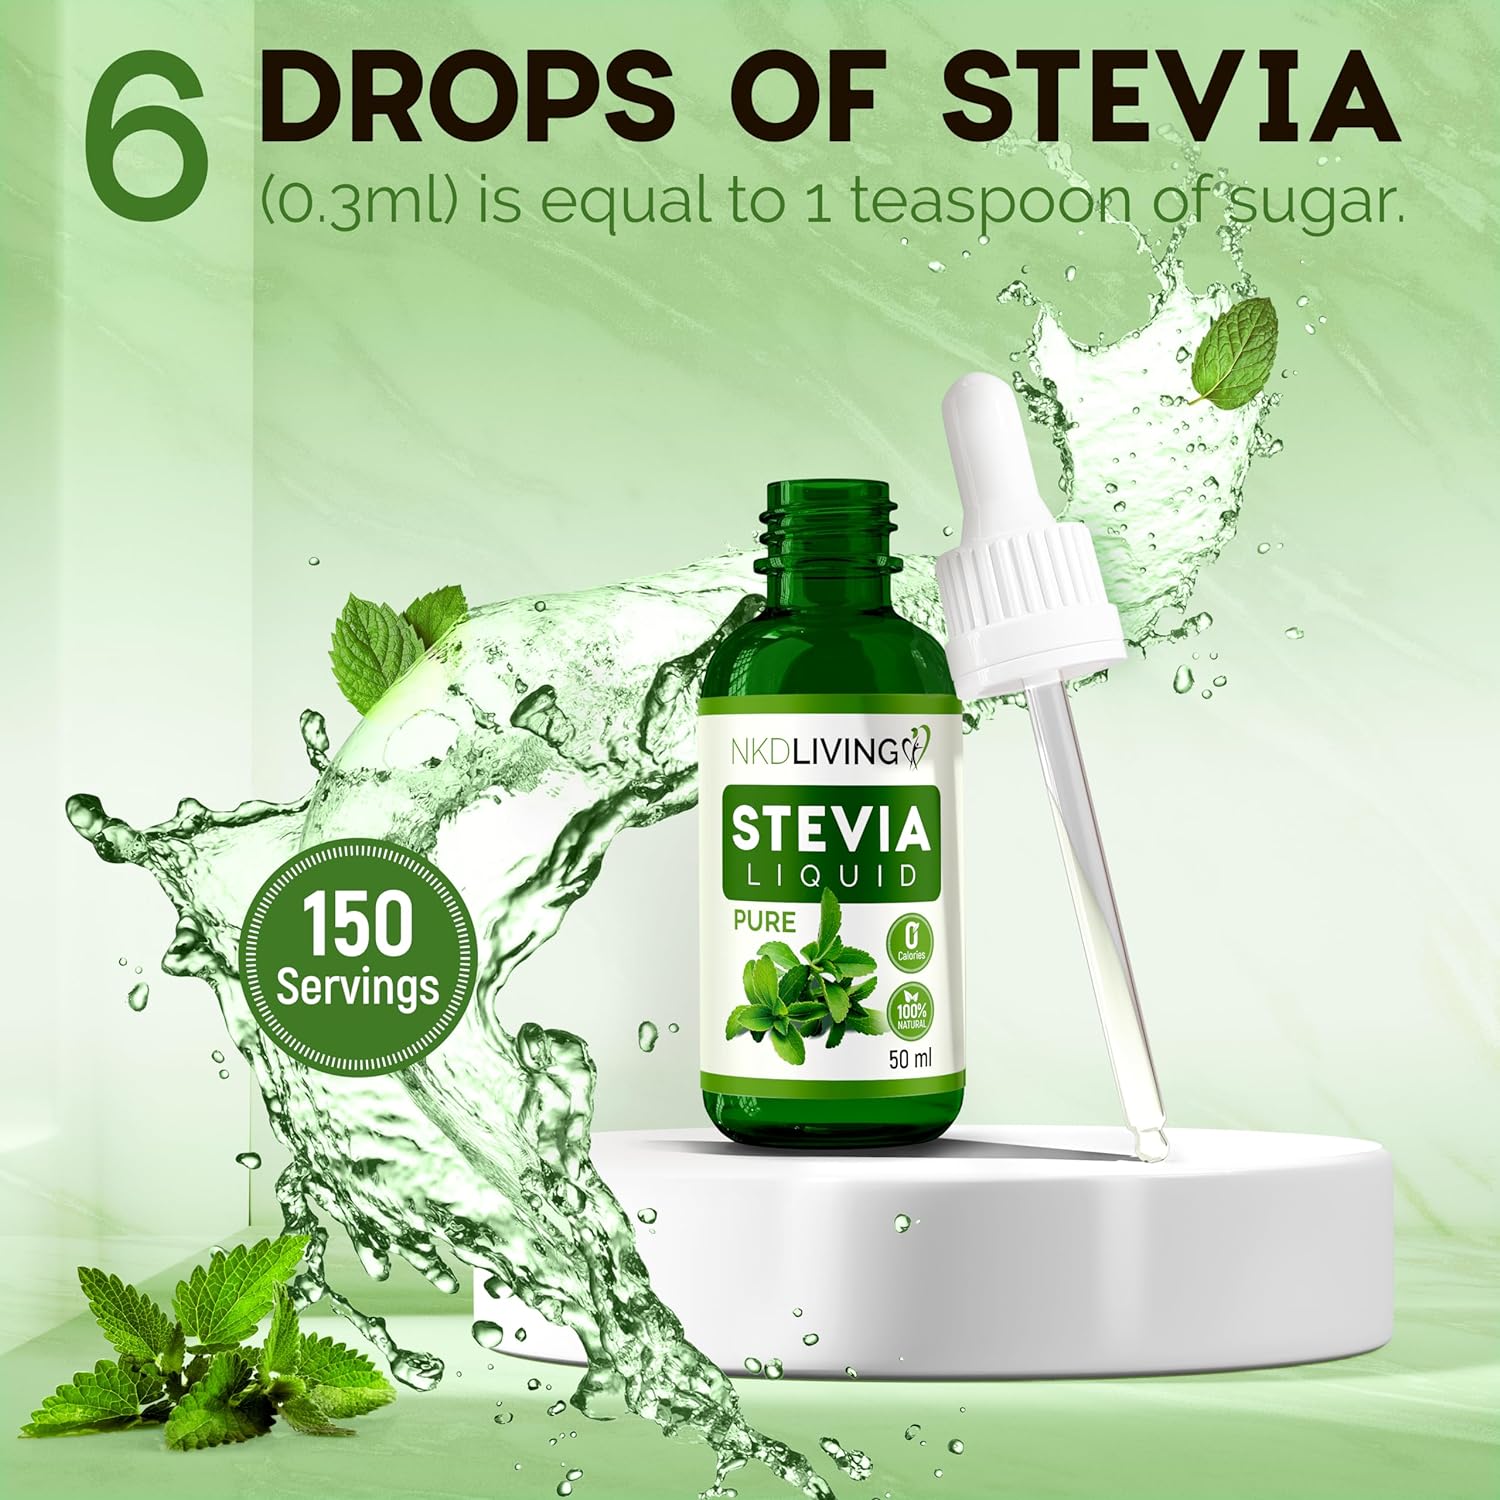 Sweetener Stevia Liquid 100% Natural 50ml